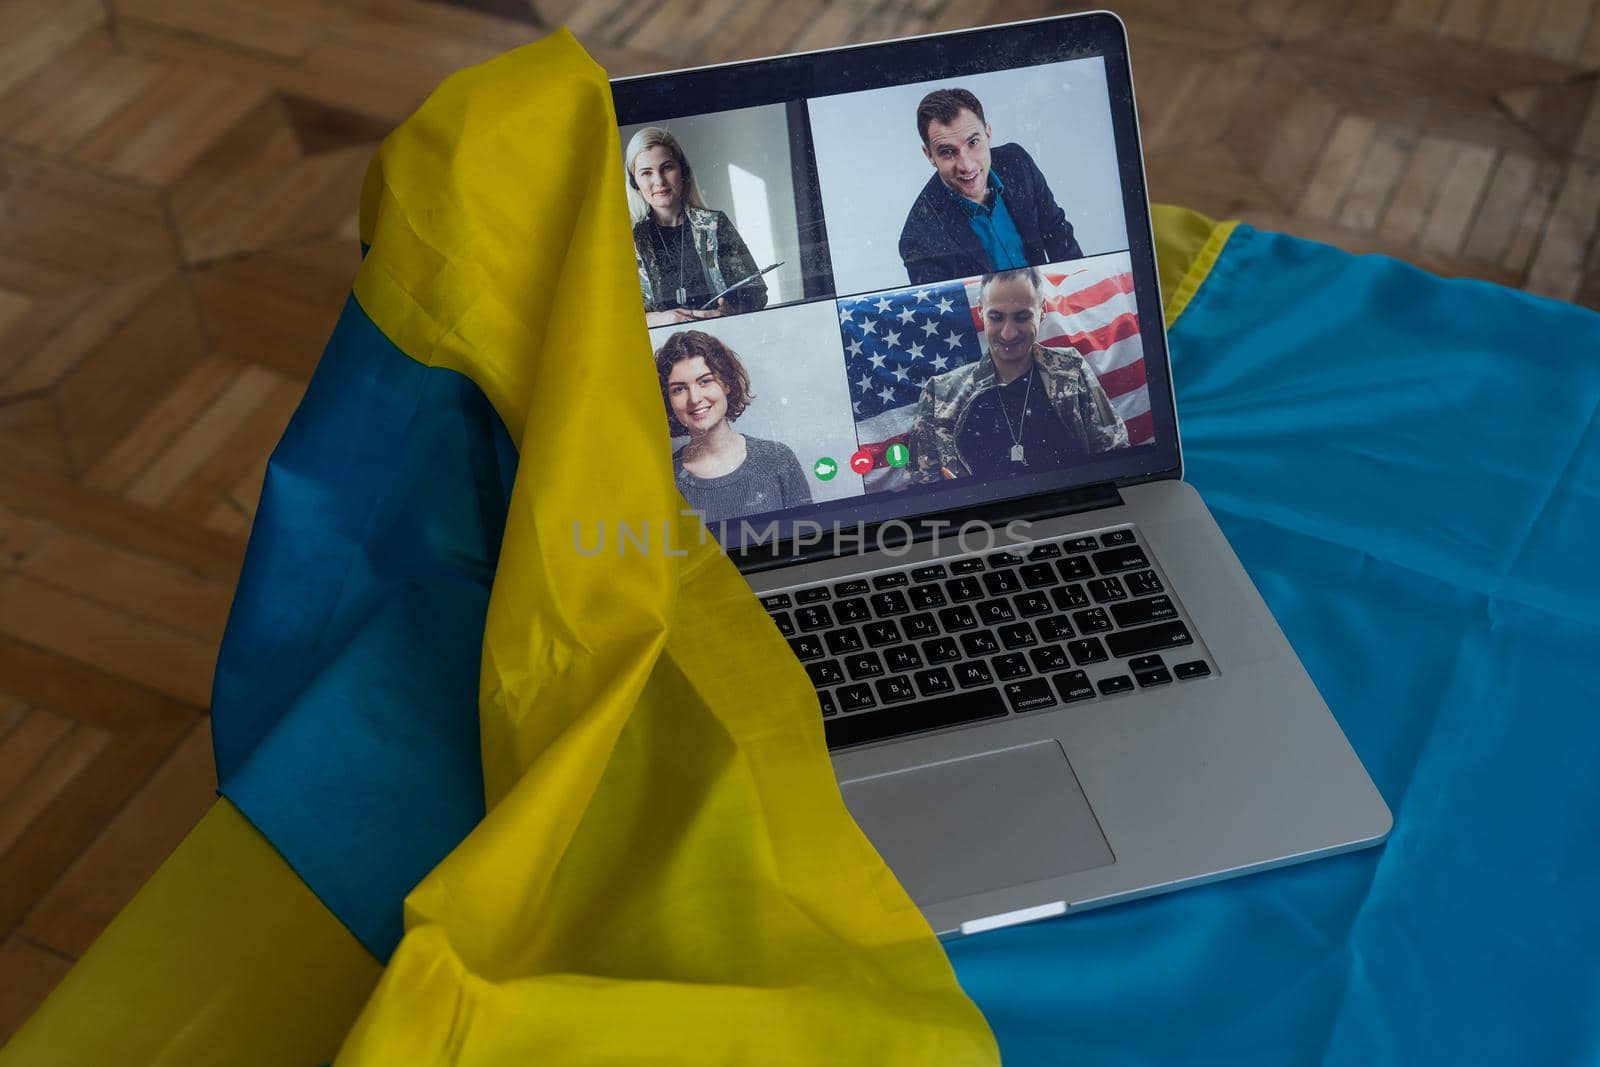 news about Ukraine on laptop. flag of ukraine background. by Andelov13